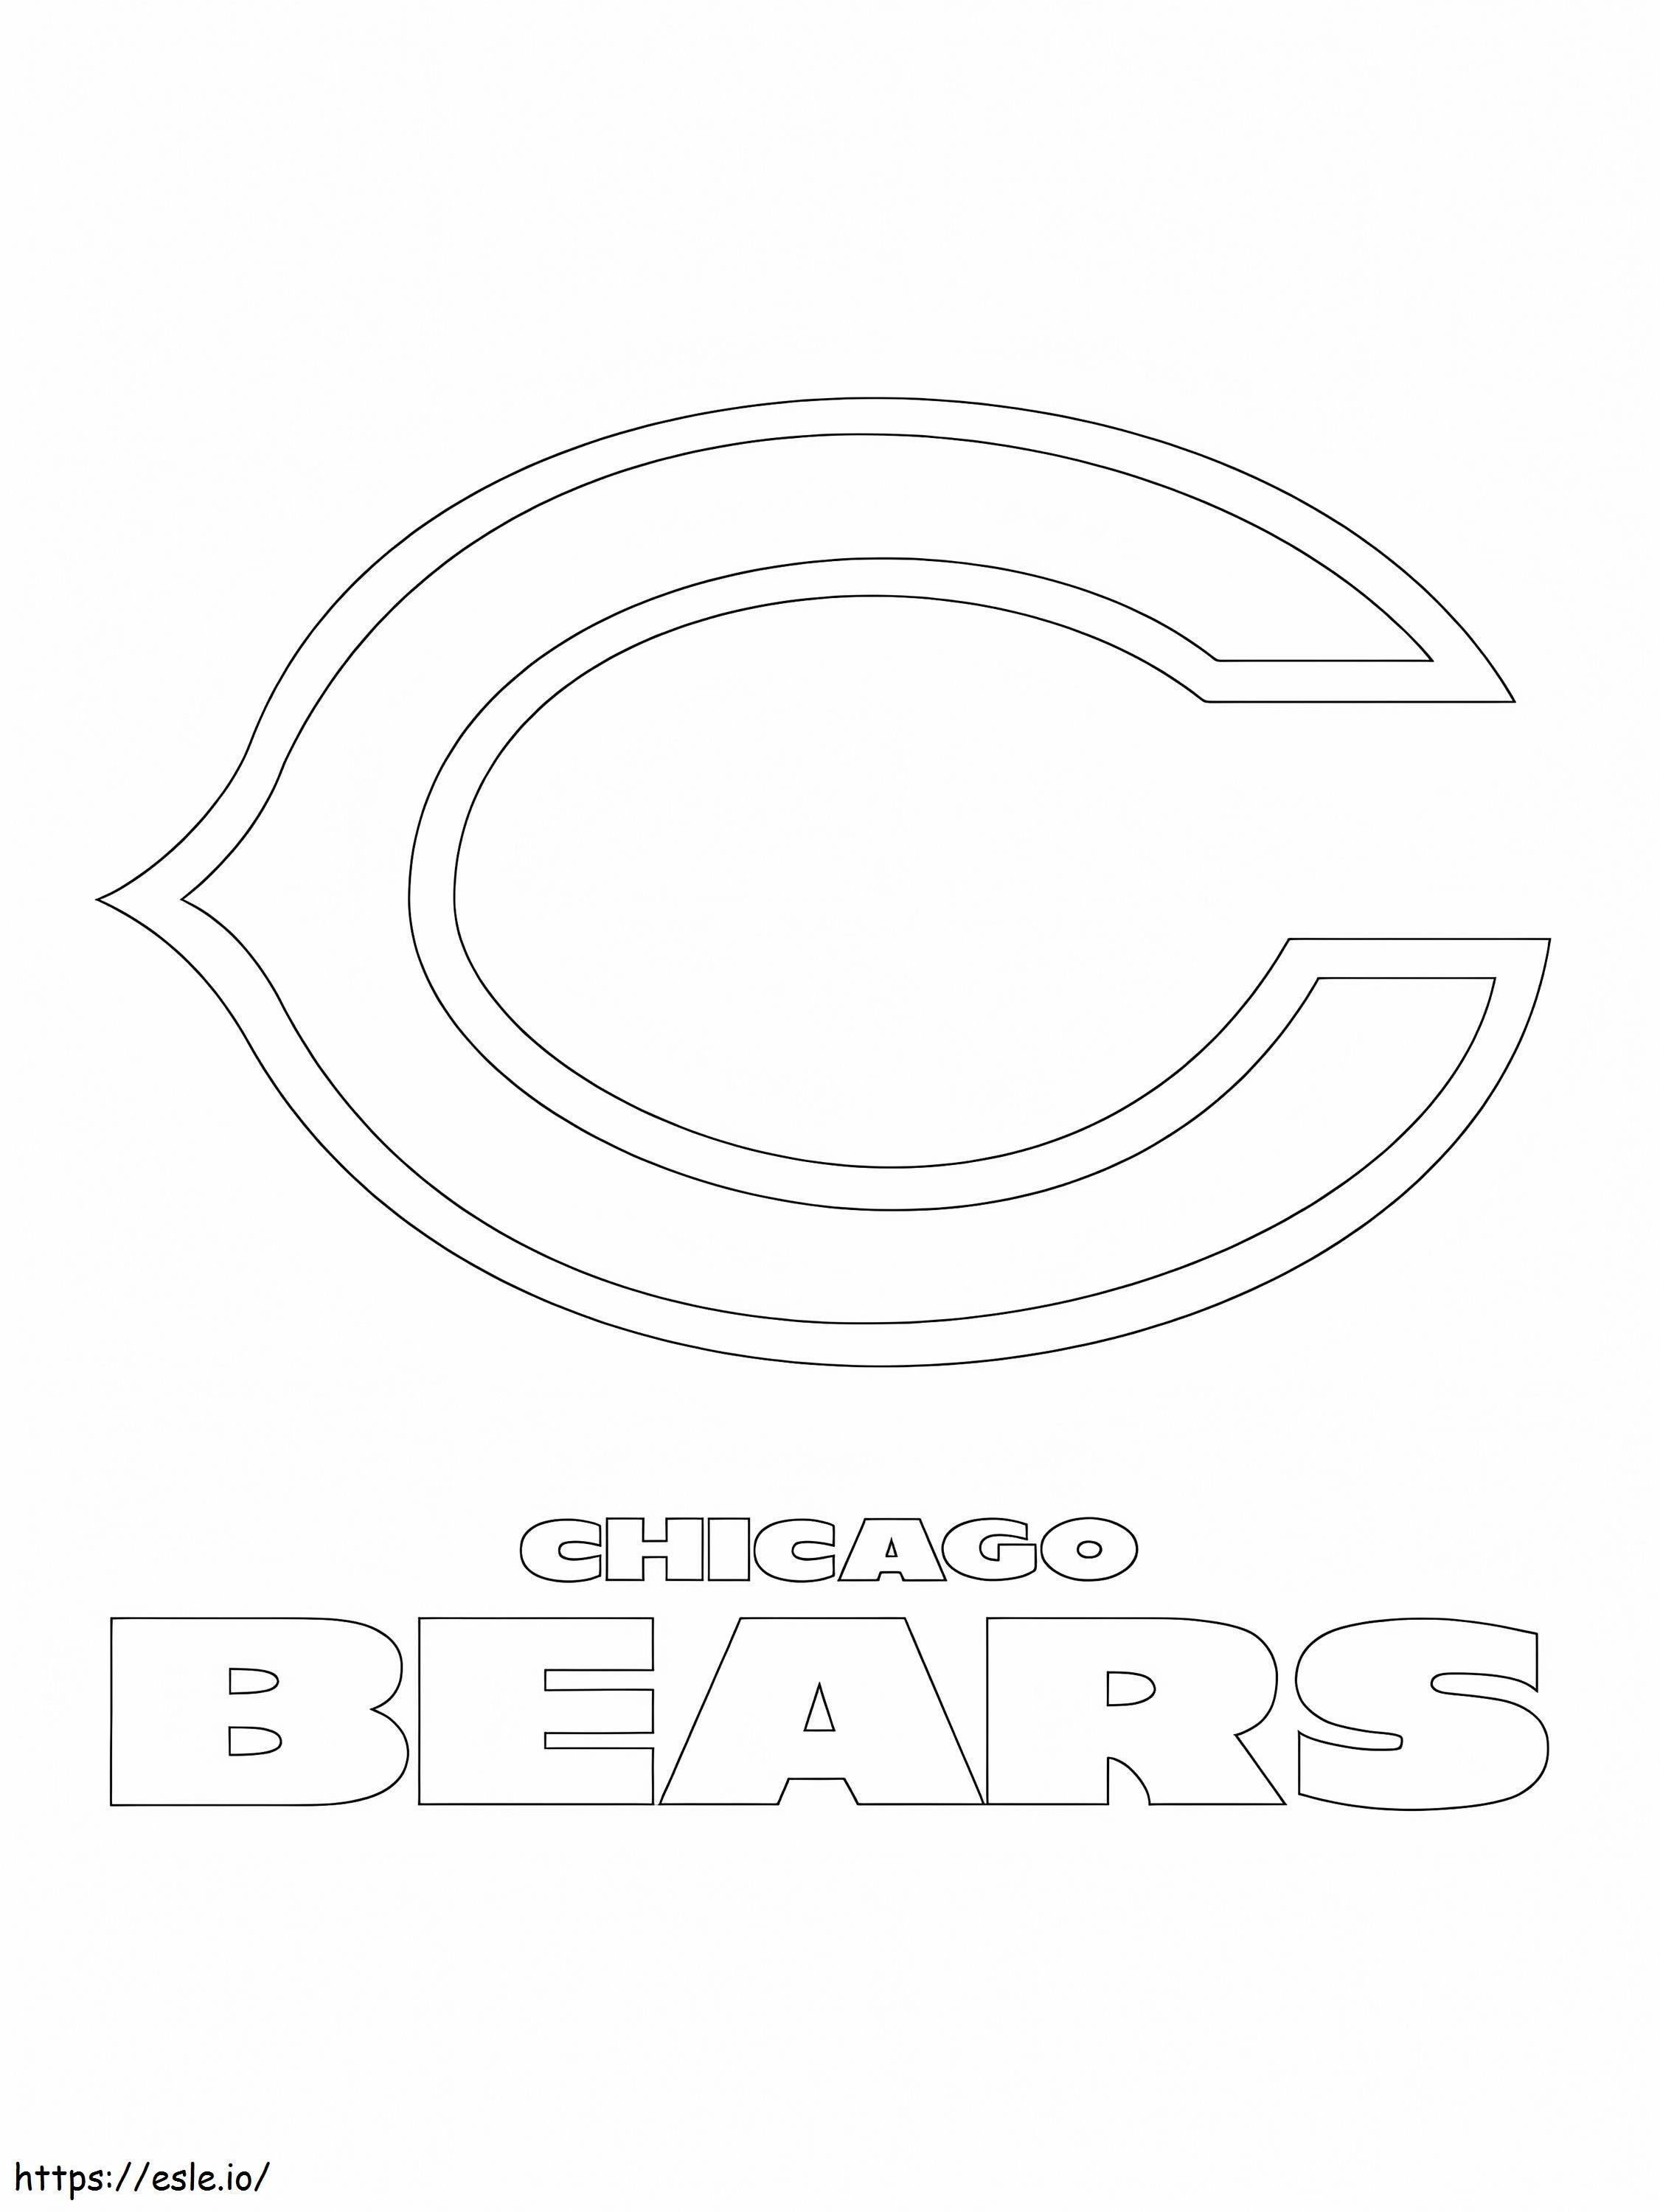 Chicago Bears logója kifestő